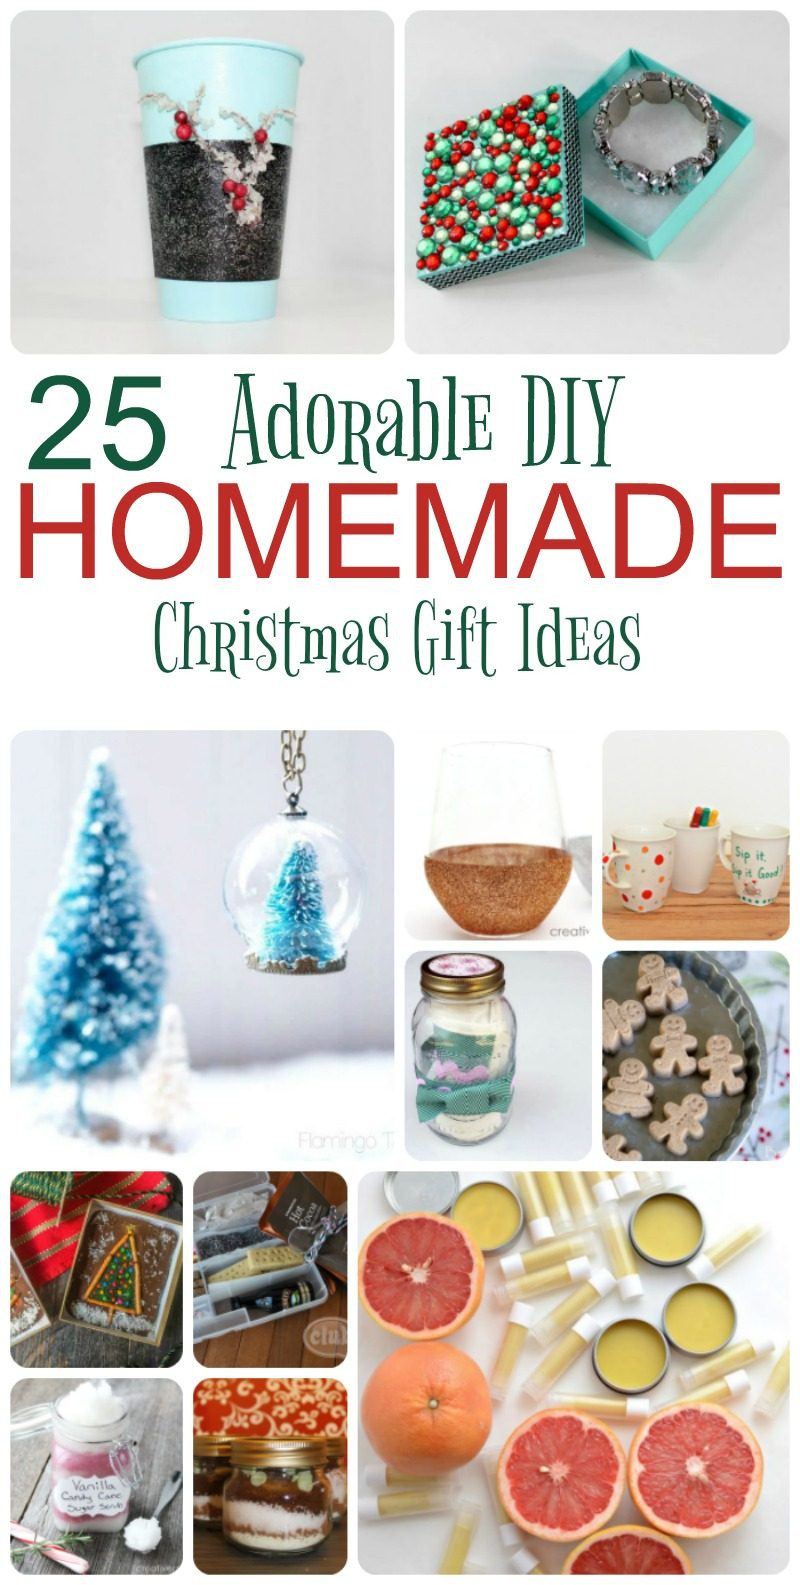 Homemade Holiday Gift Ideas
 25 Adorable Homemade Gifts to Make for Christmas Pretty